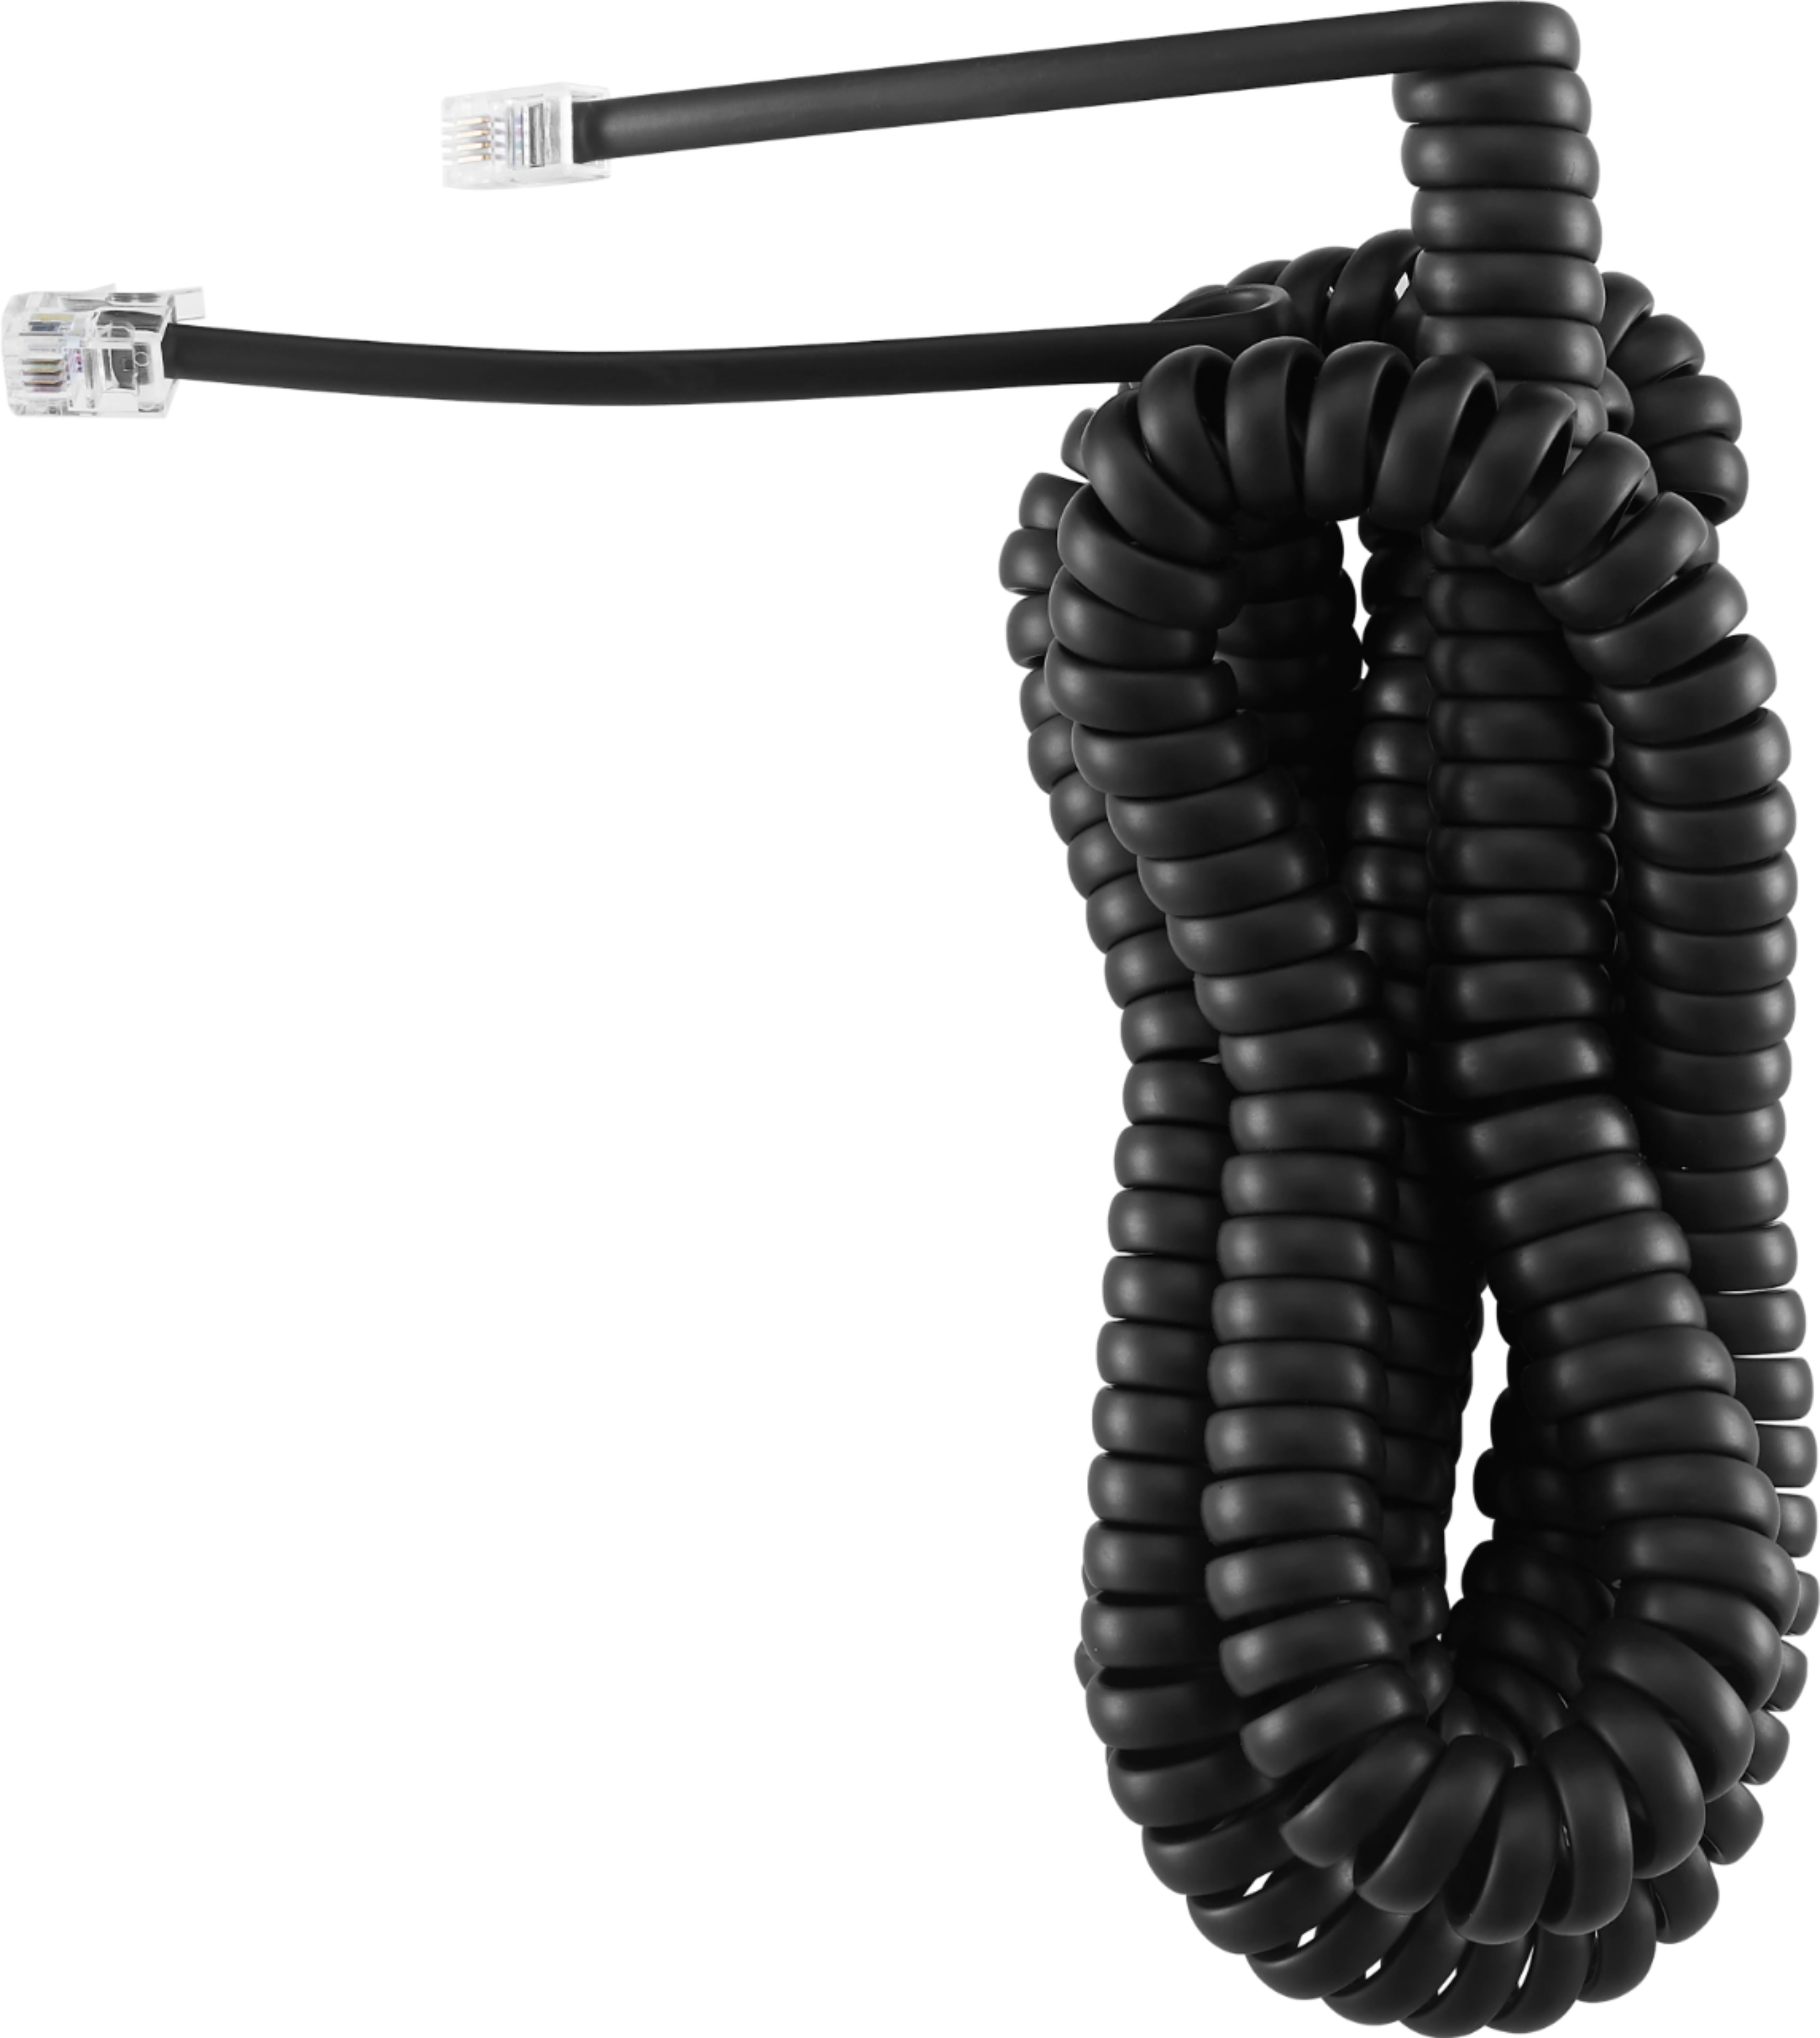 Insignia™ 2' SATA III Hard Drive Cable Black NS-PZ025012 - Best Buy